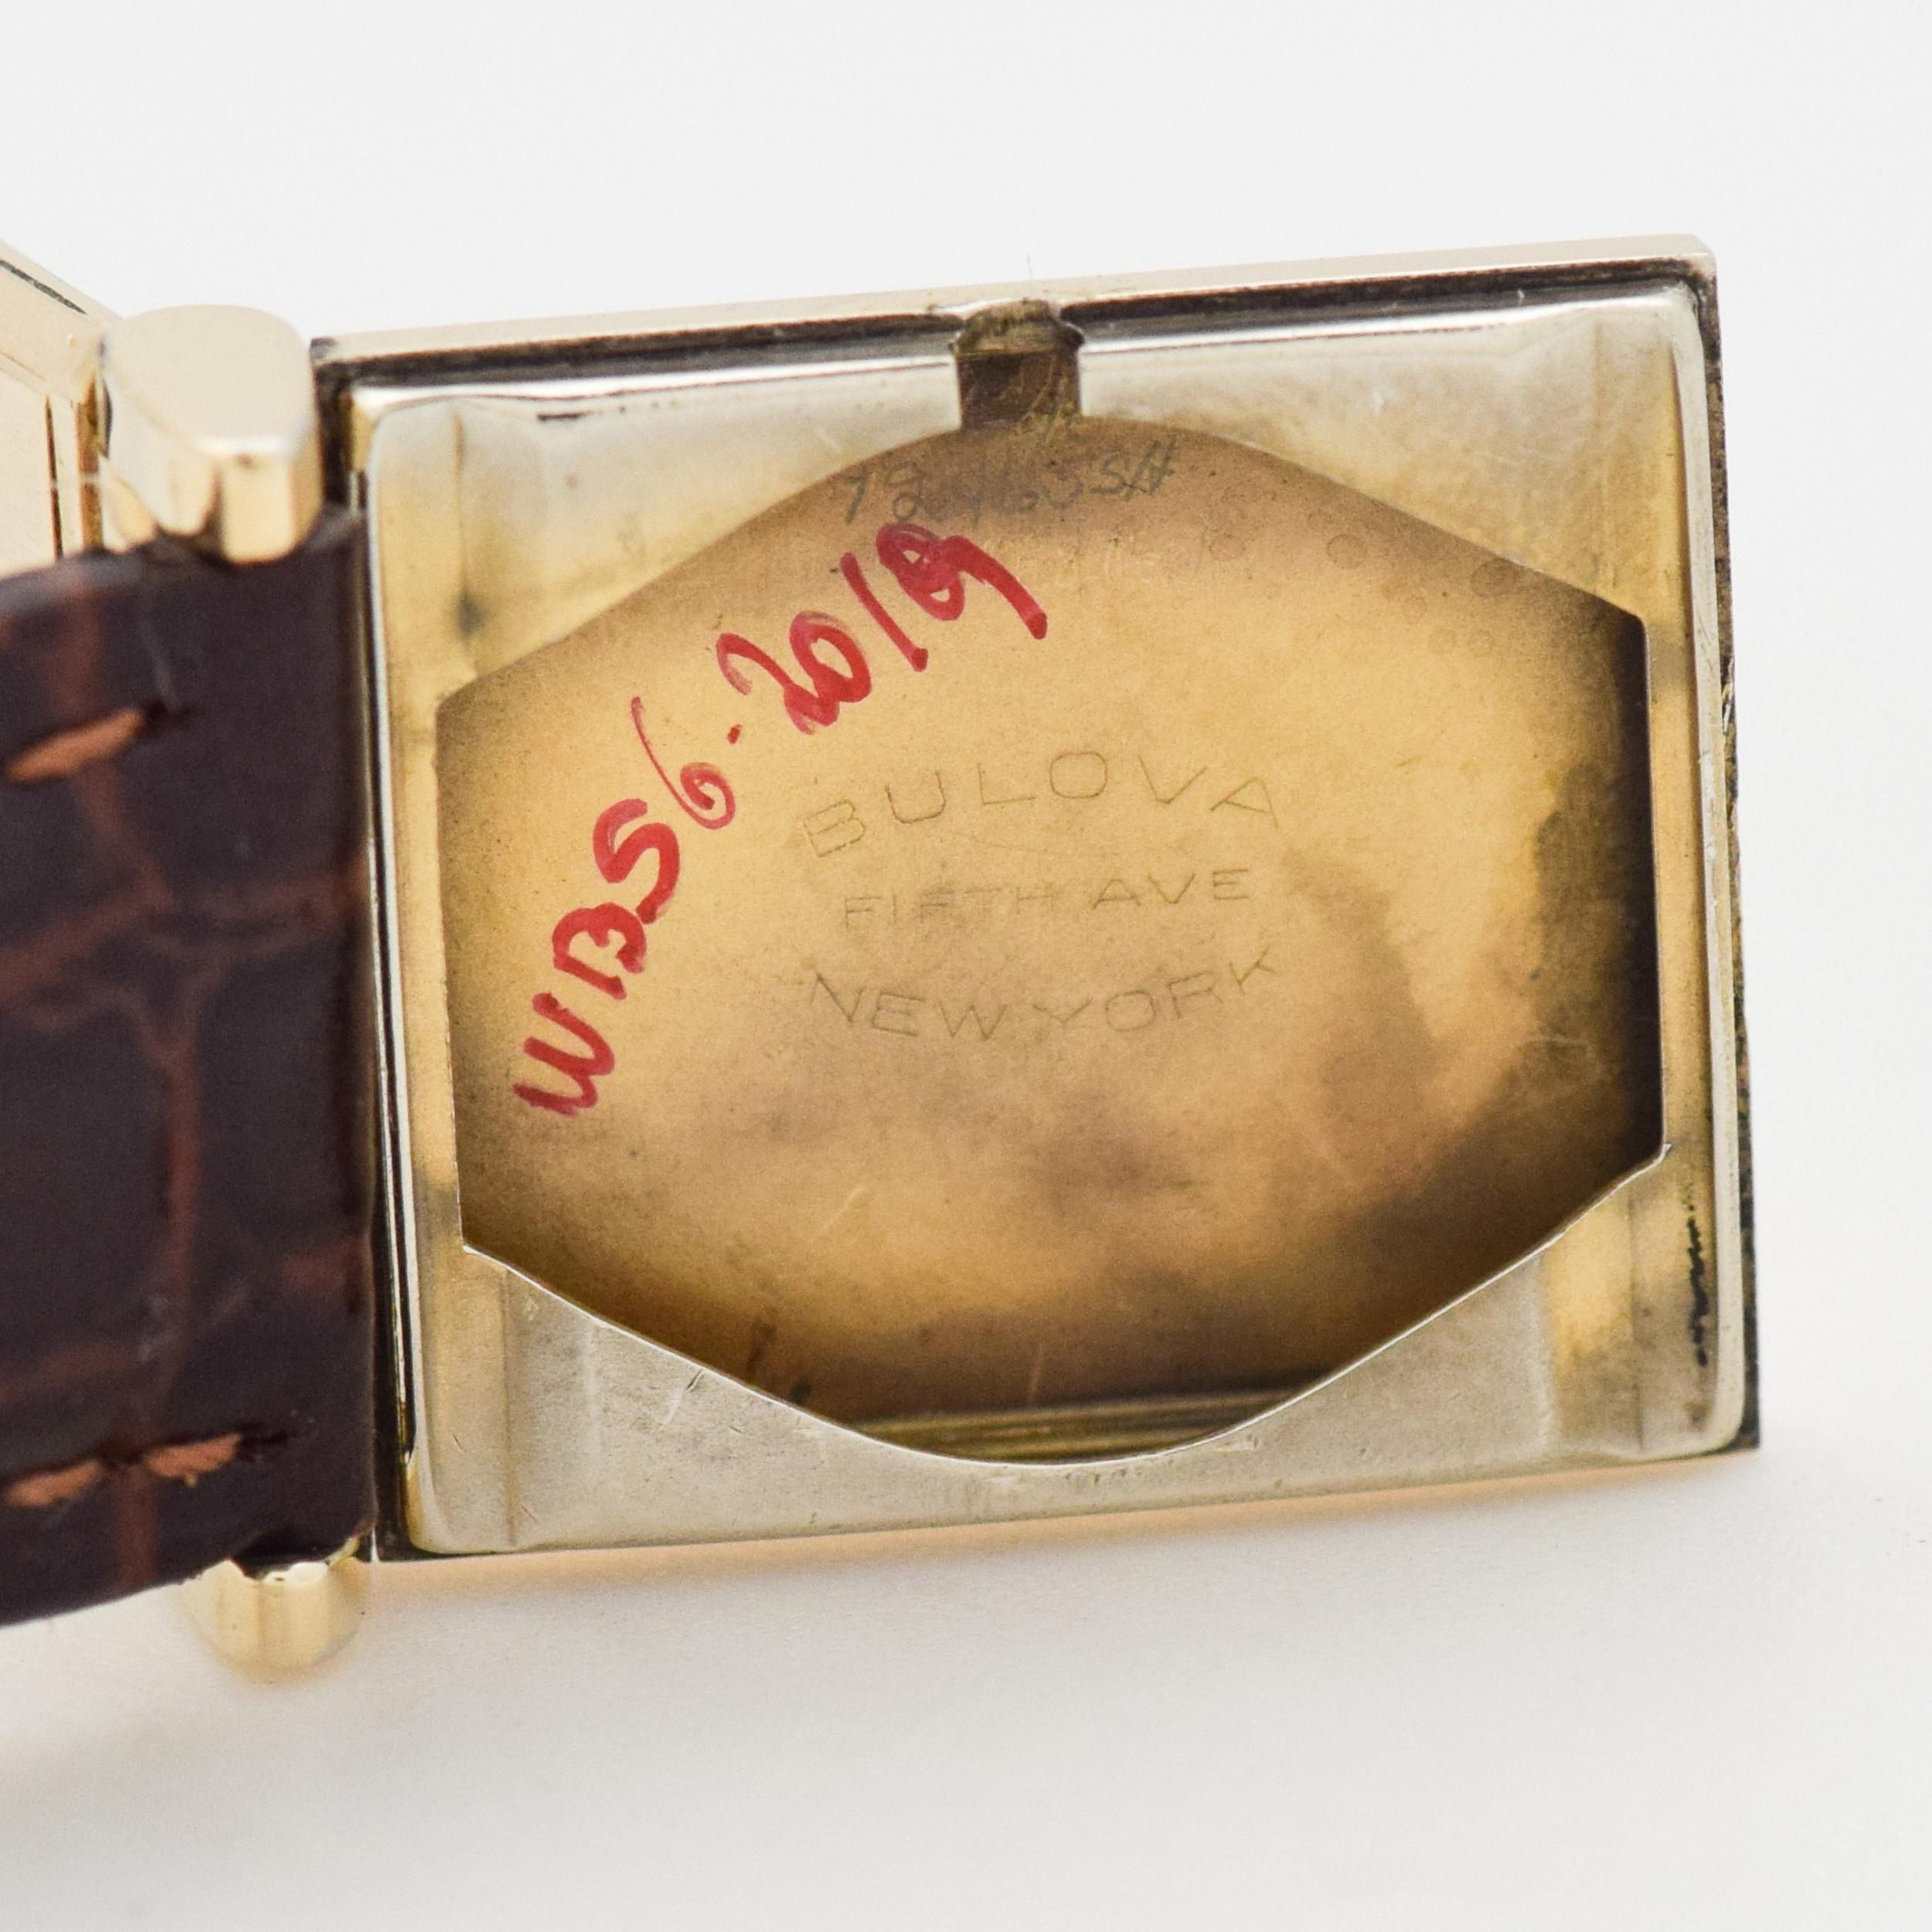 Vintage Bulova Rectangular-Shaped Watch, 1950 4